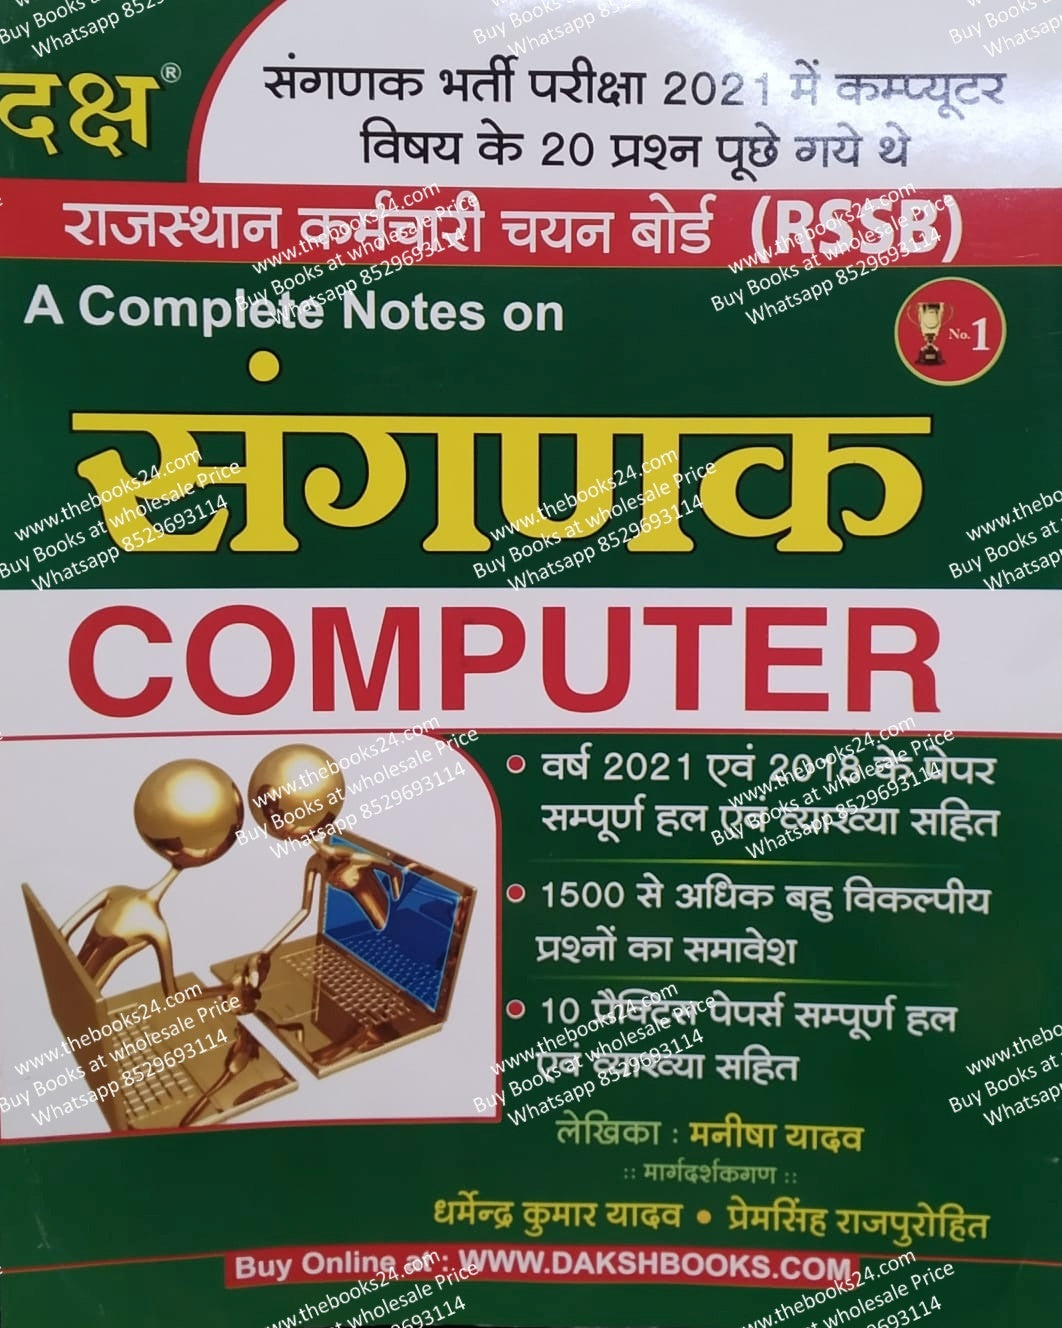 Daksha Sangank Computer (A Complete Notes On)